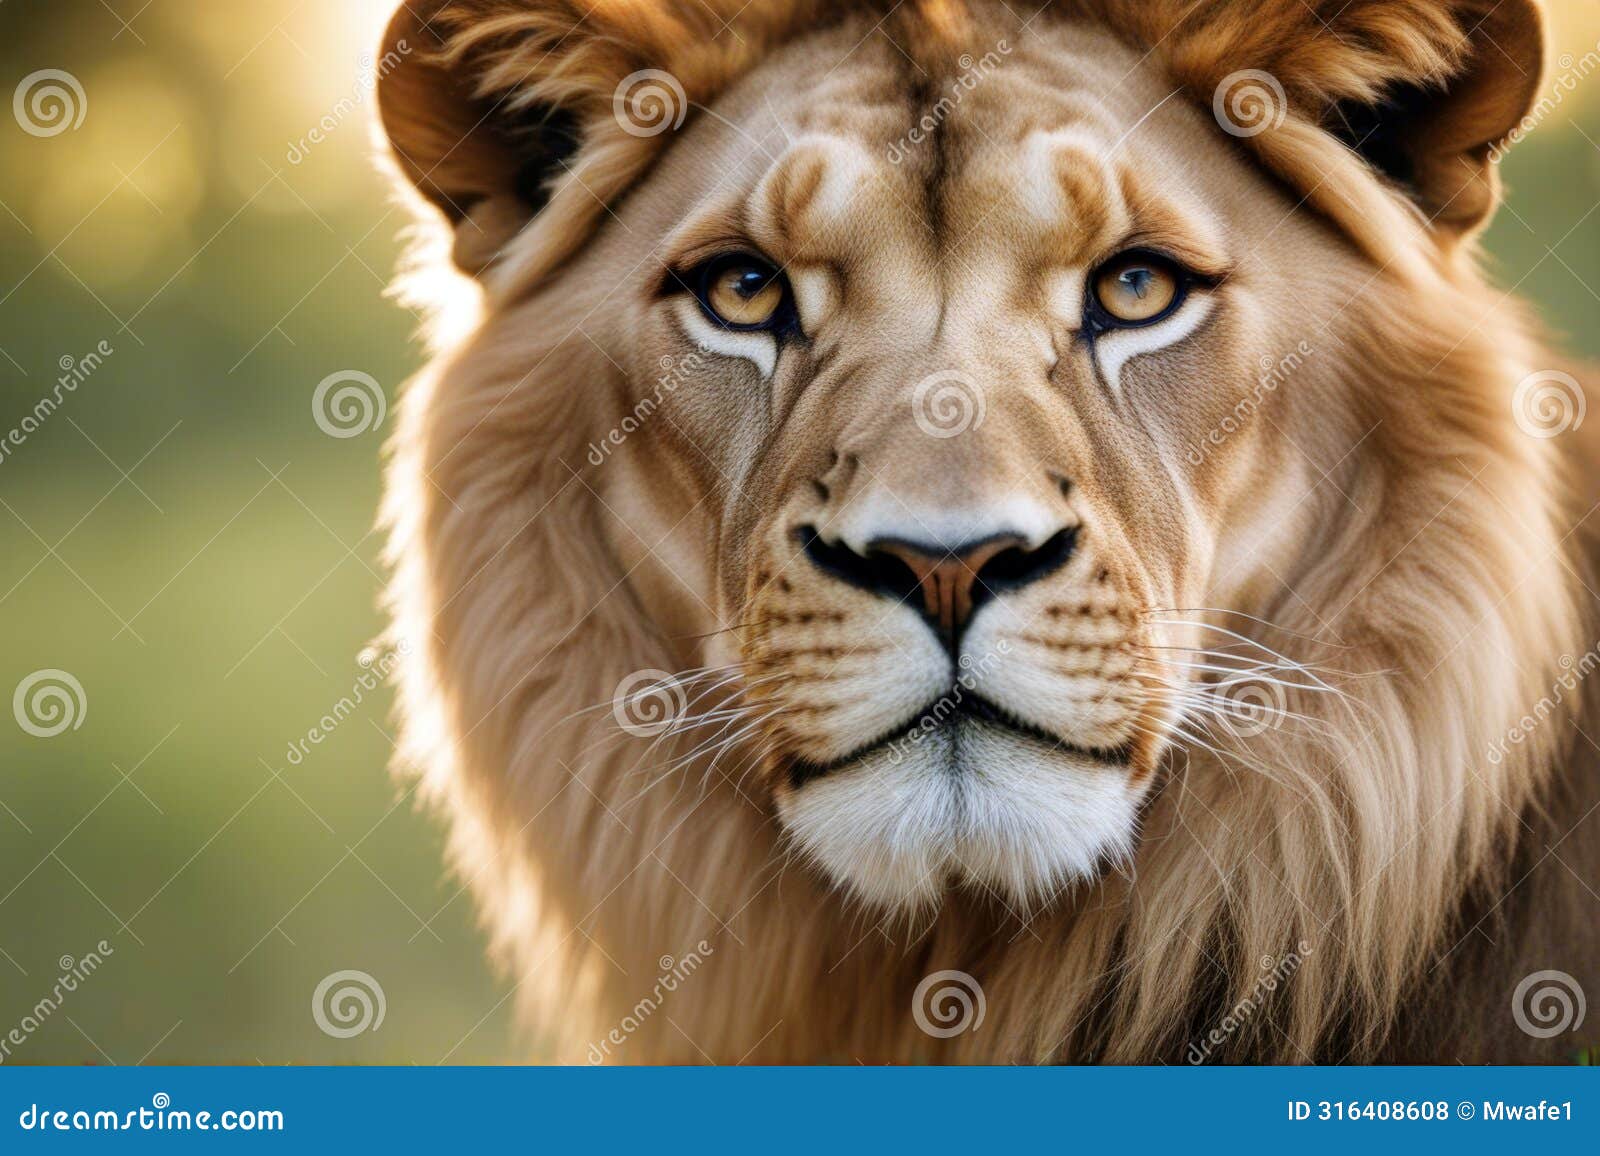 lion tlo colours salvation expressive draw felino safari head portrait art wildlife animal carnivore jesus christ gital leo knife